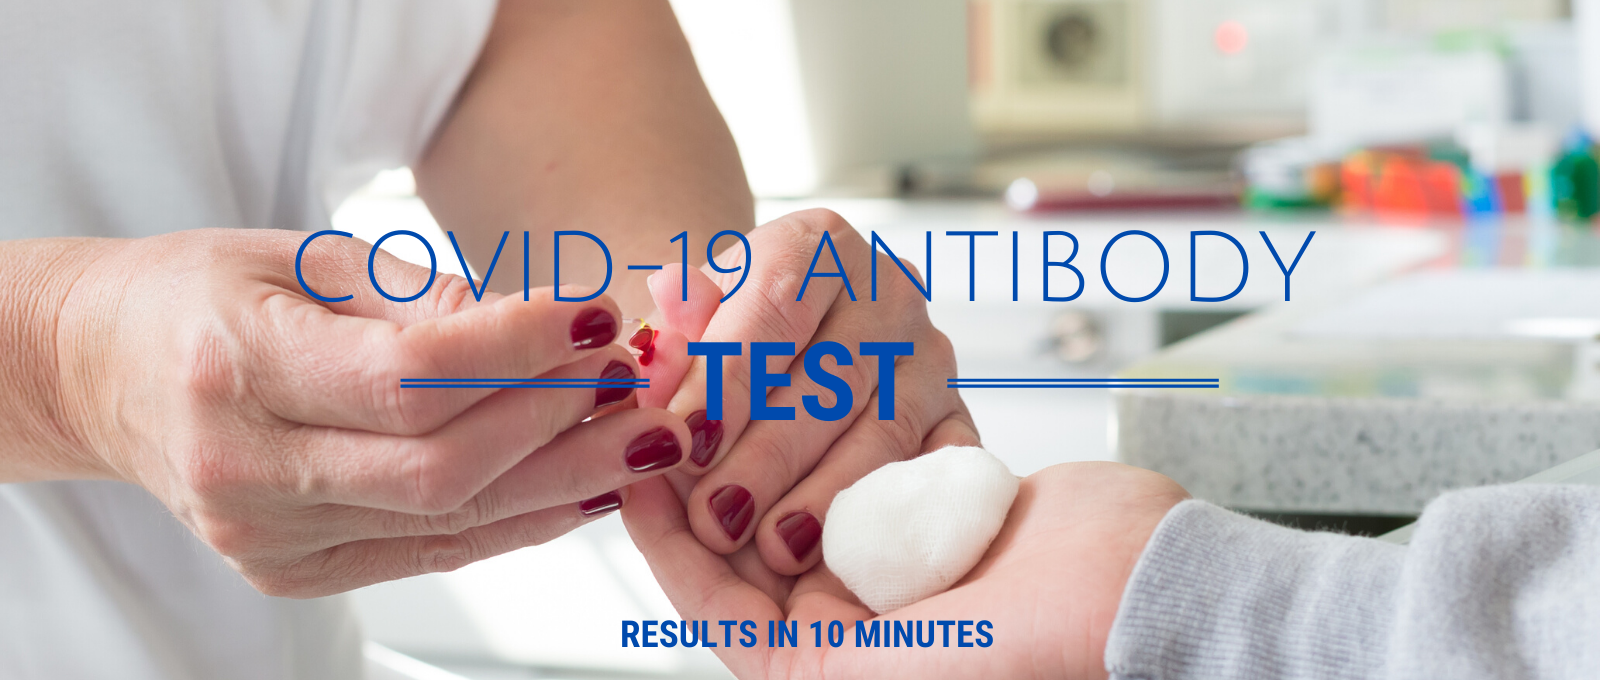 Covid-19 Antibody Test